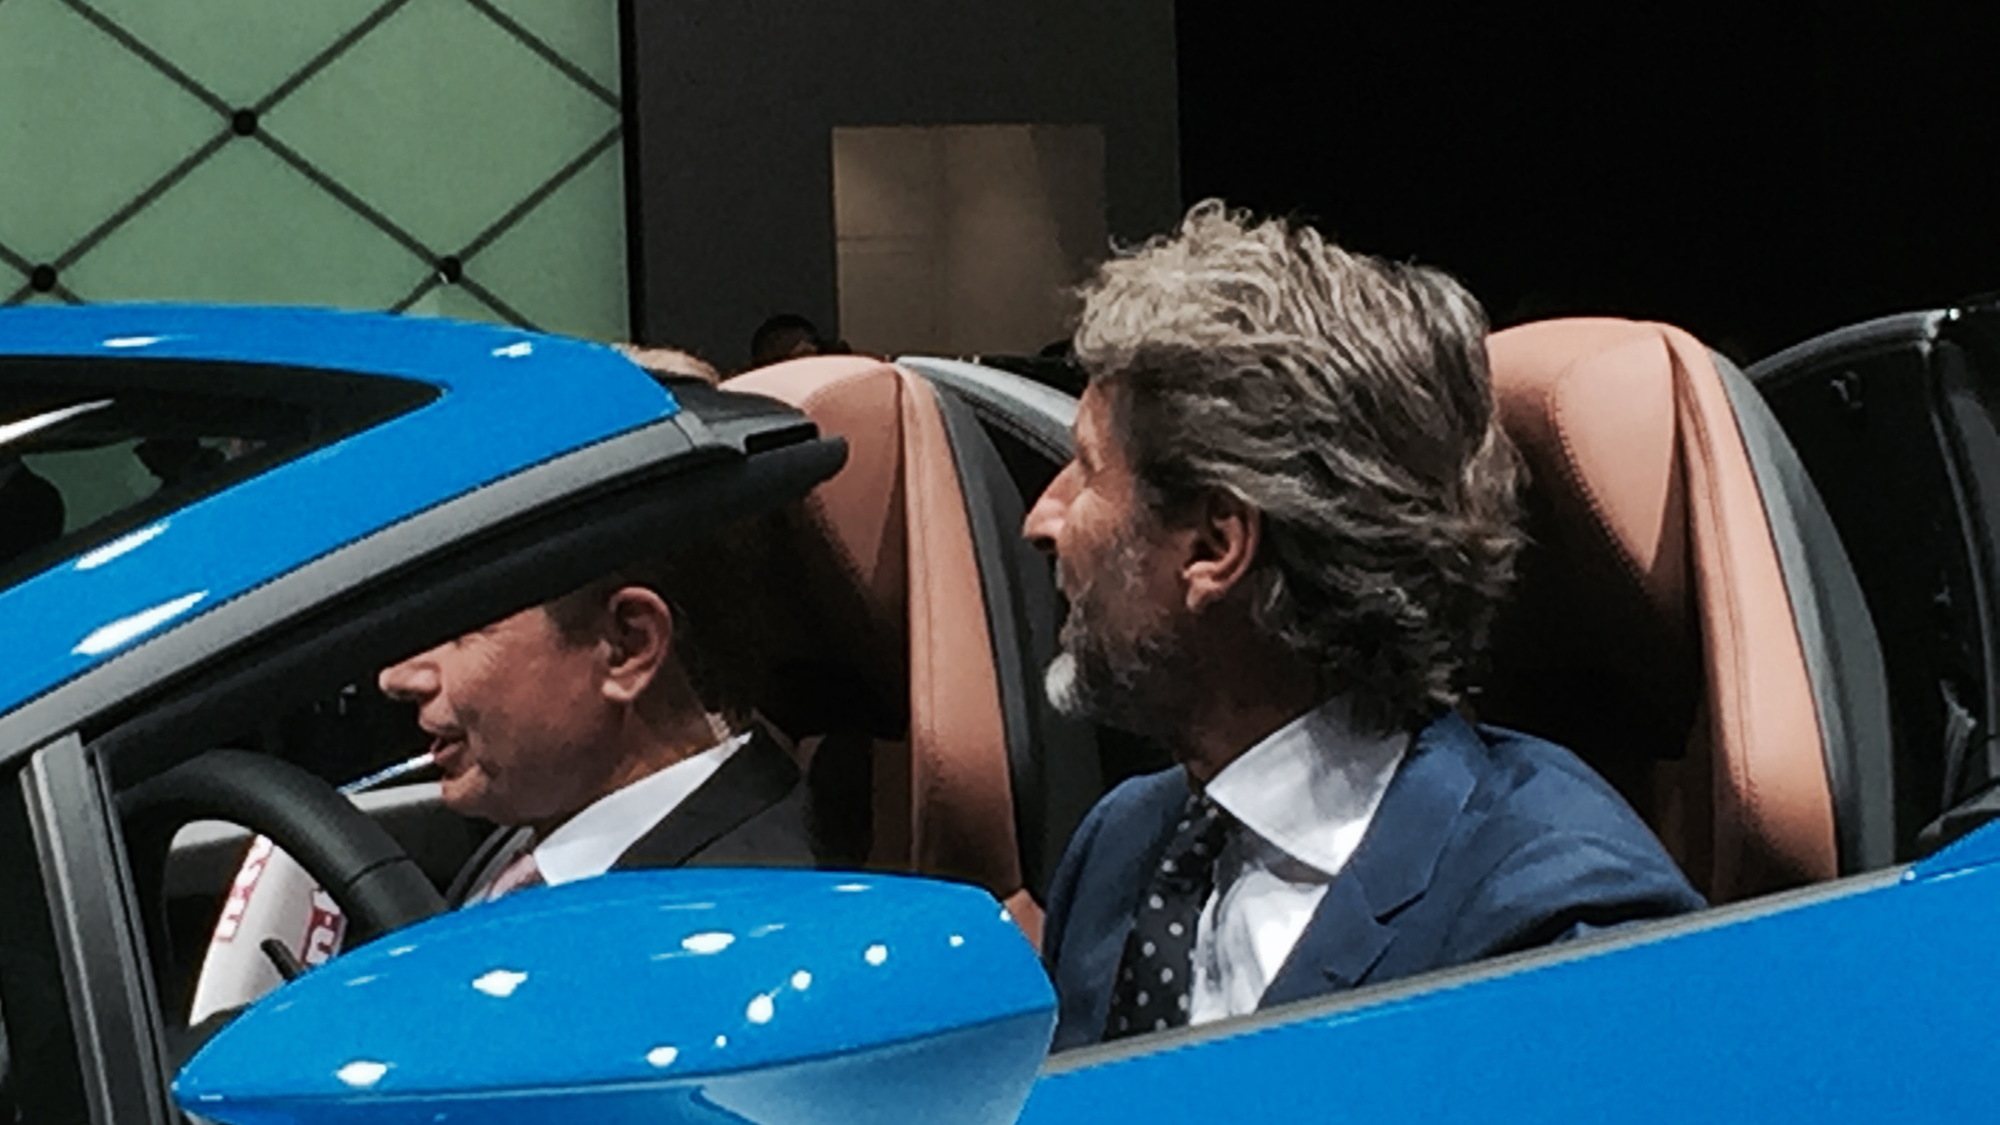 Lamborghini Huracan Spyder, 2015 Frankfurt Auto Show